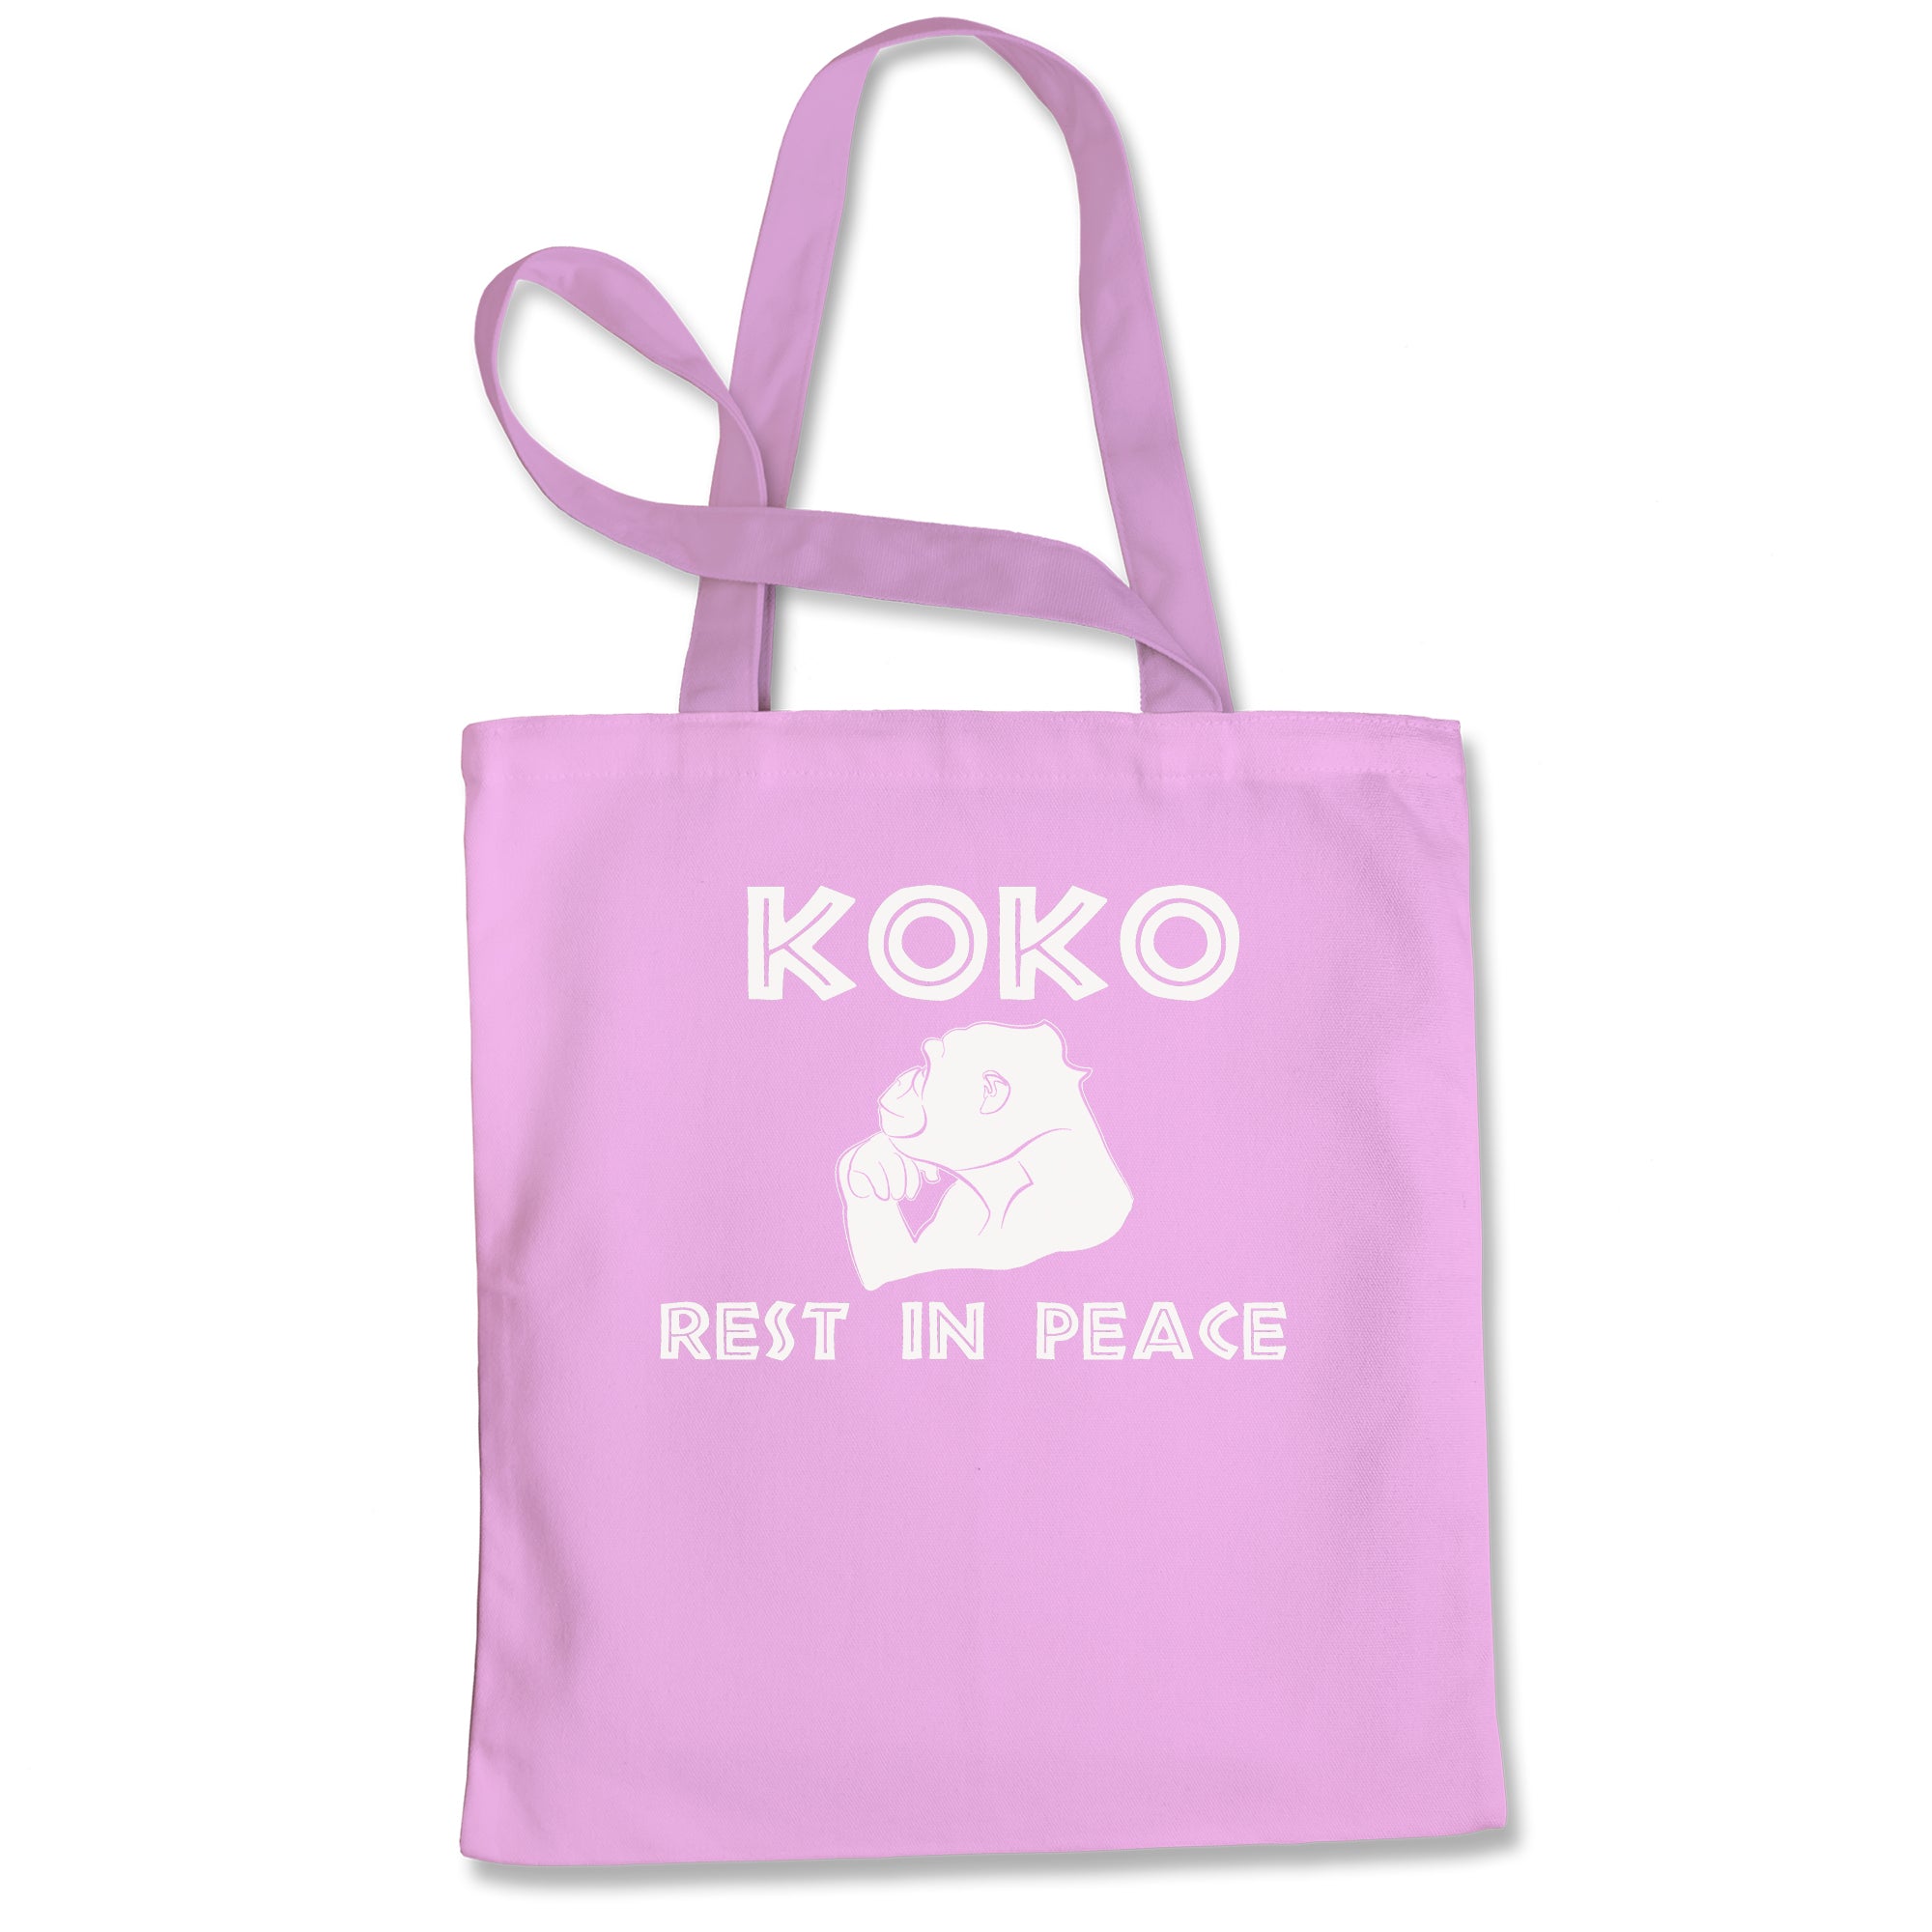 Koko the Talking Gorilla Rest in Peace Tote Bag